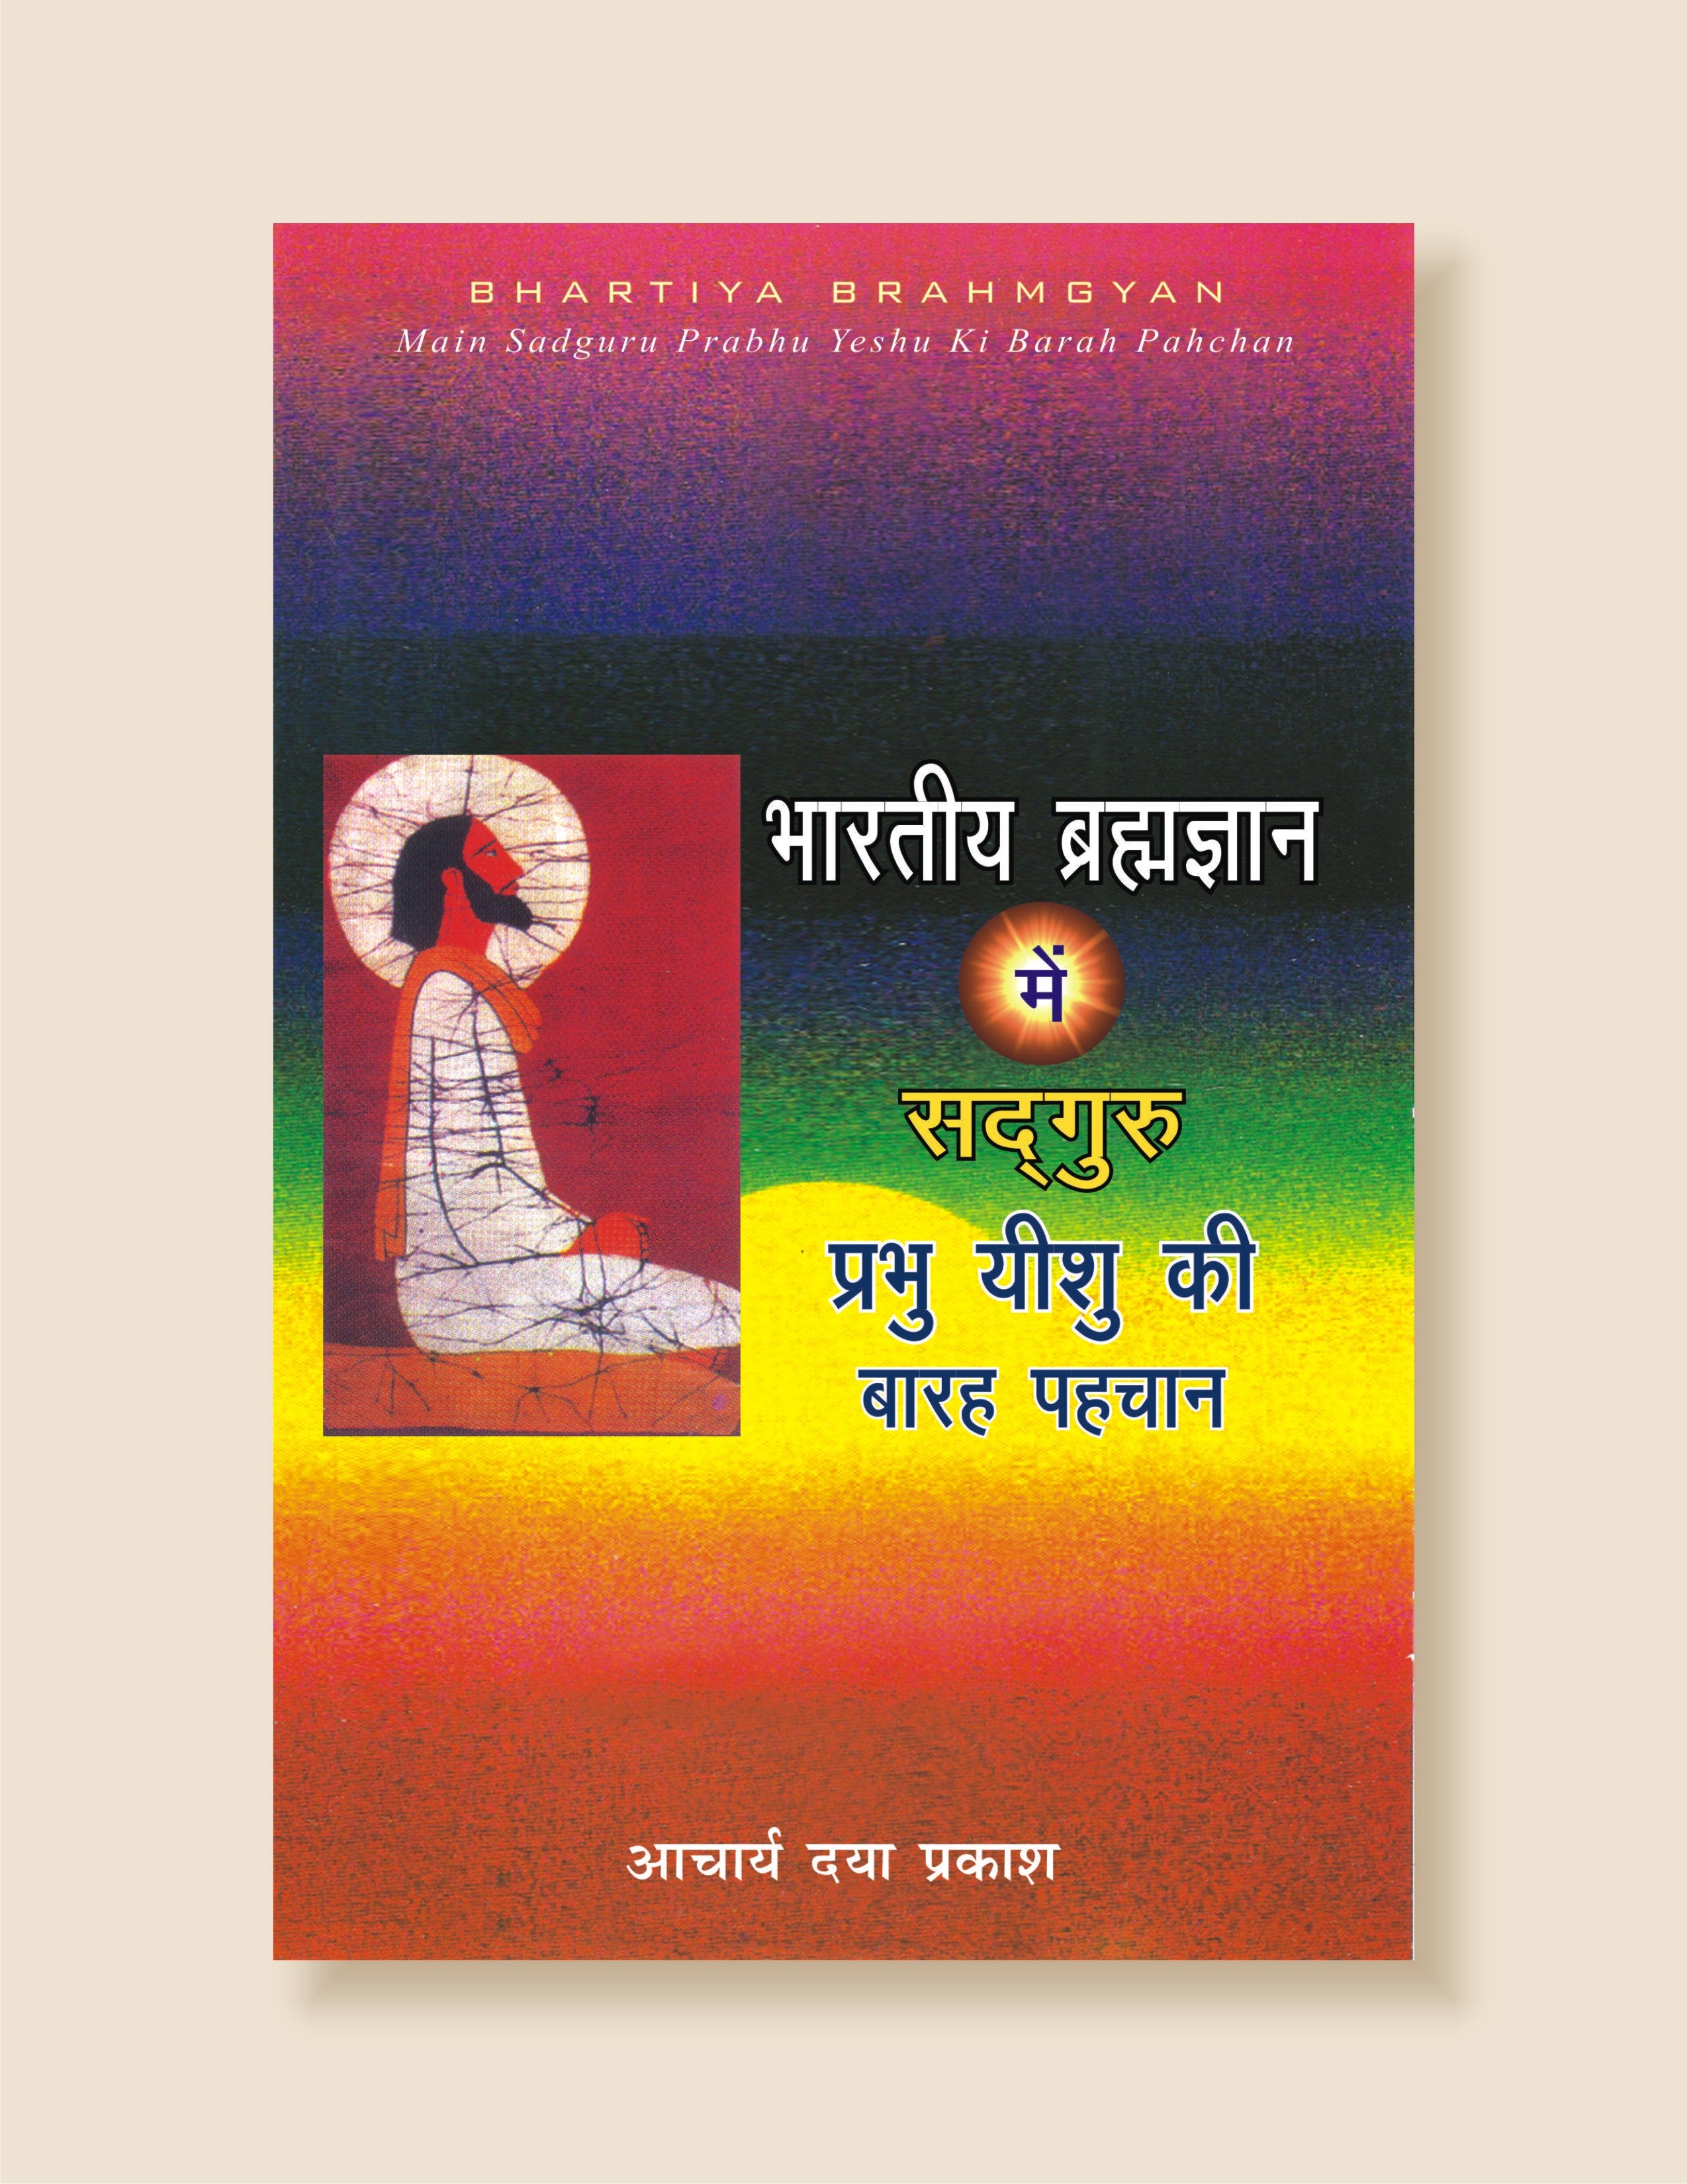 Bharatiya Brahmgyan mein sadguru Prabhu yeshu ki barah pahachan / भारतीय ब्रह्मज्ञान में सद्गुरु प्रभु यीशु की बारह पहचान